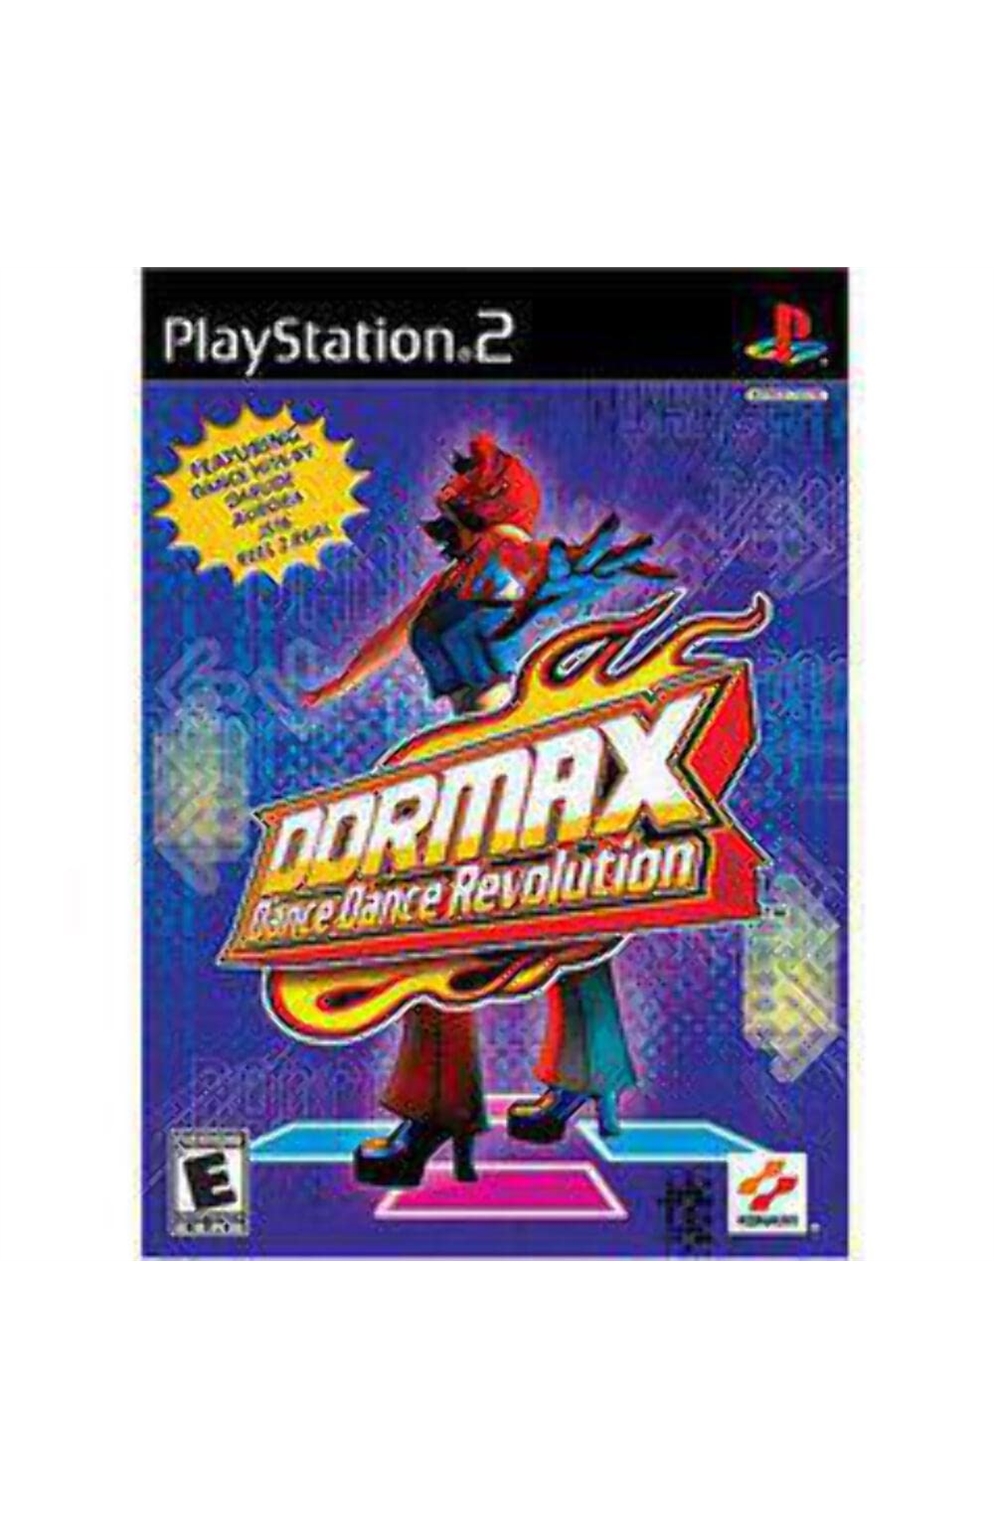 Playstation 2 Ps2 Ddrmax: Dance Dance Revolution